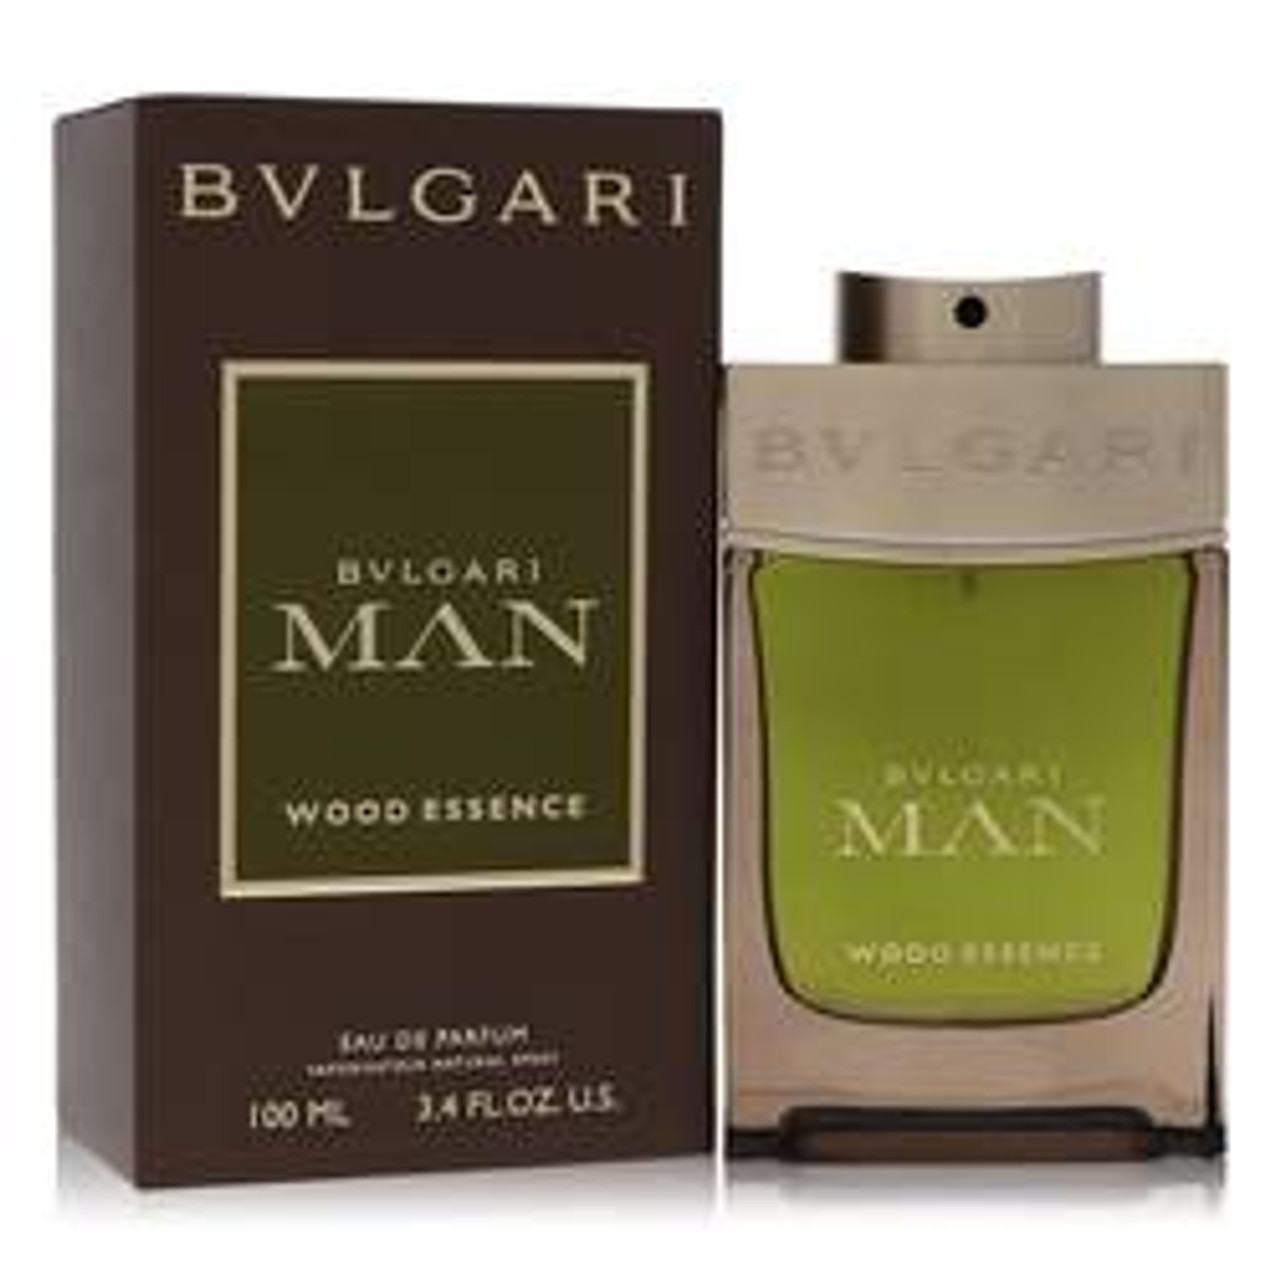 Bvlgari Man Wood Essence Cologne By Bvlgari Eau De Parfum Spray 3.4 oz for Men - *Pre-Order